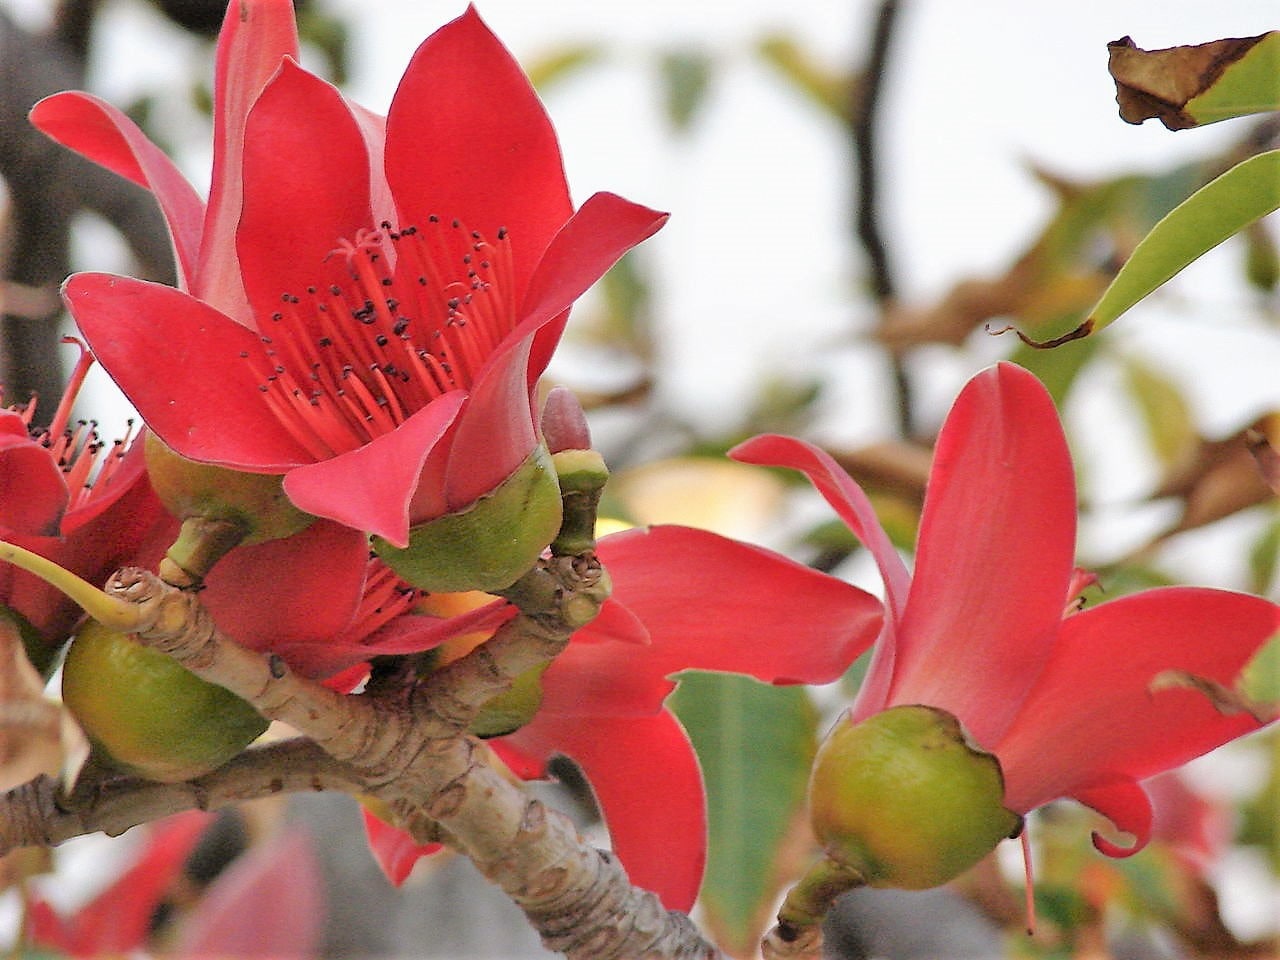 10 RED SILK COTTON Tree Bombax Ceiba Kapok Tropical Flower Seeds